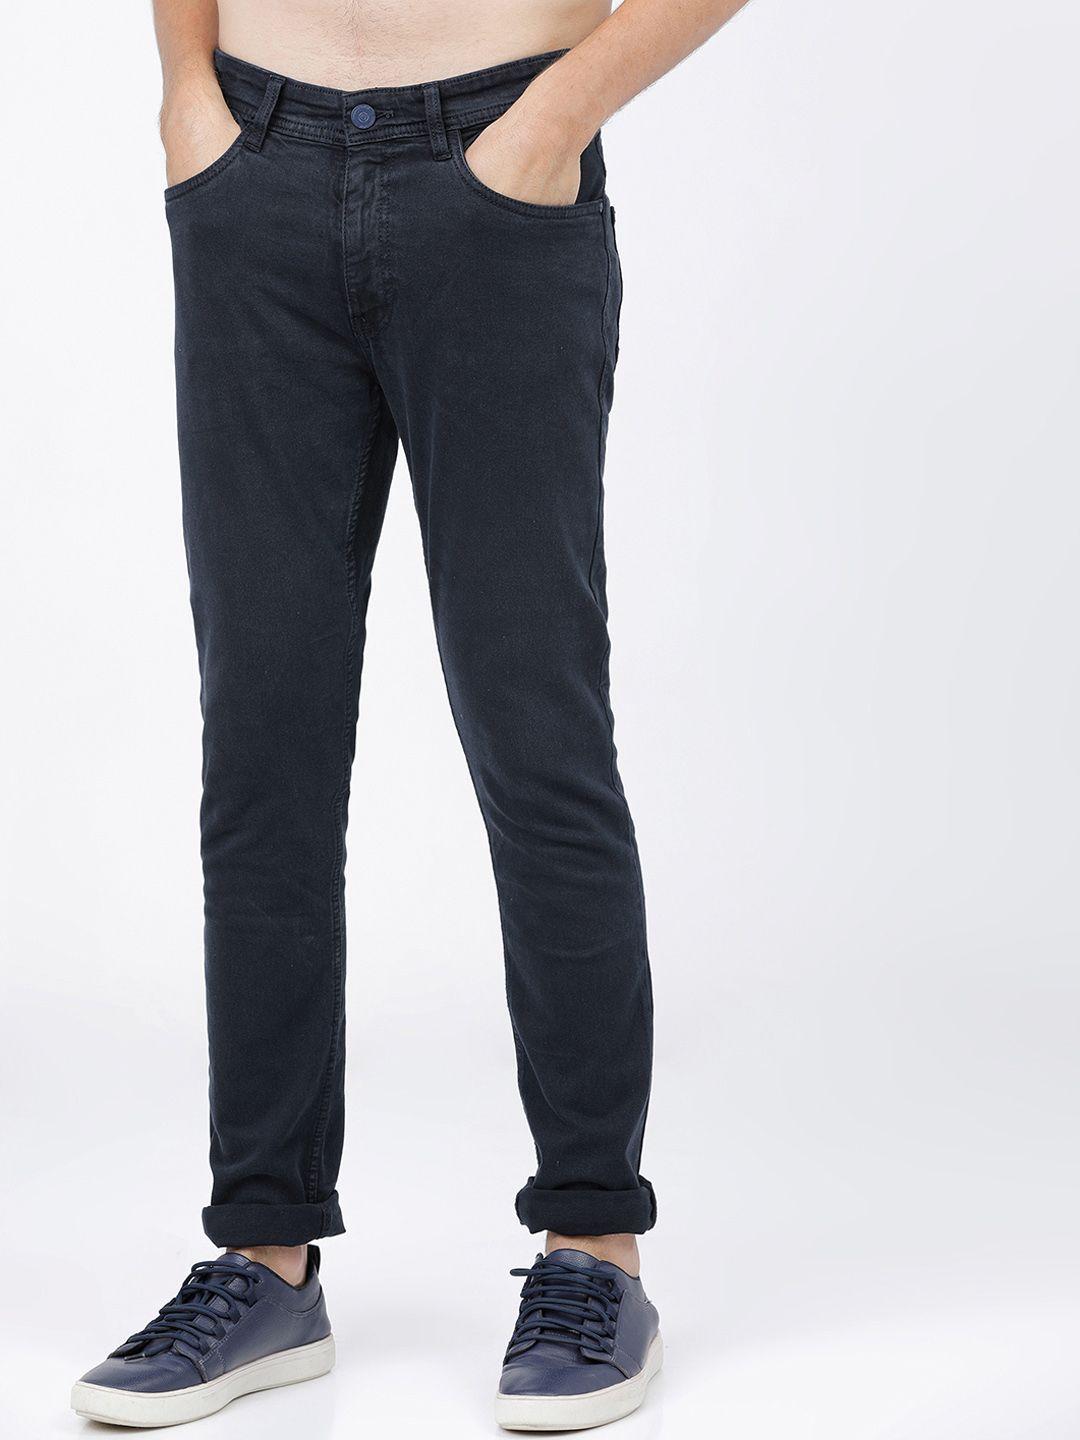 locomotive men navy blue slim fit mid-rise clean look stretchable jeans